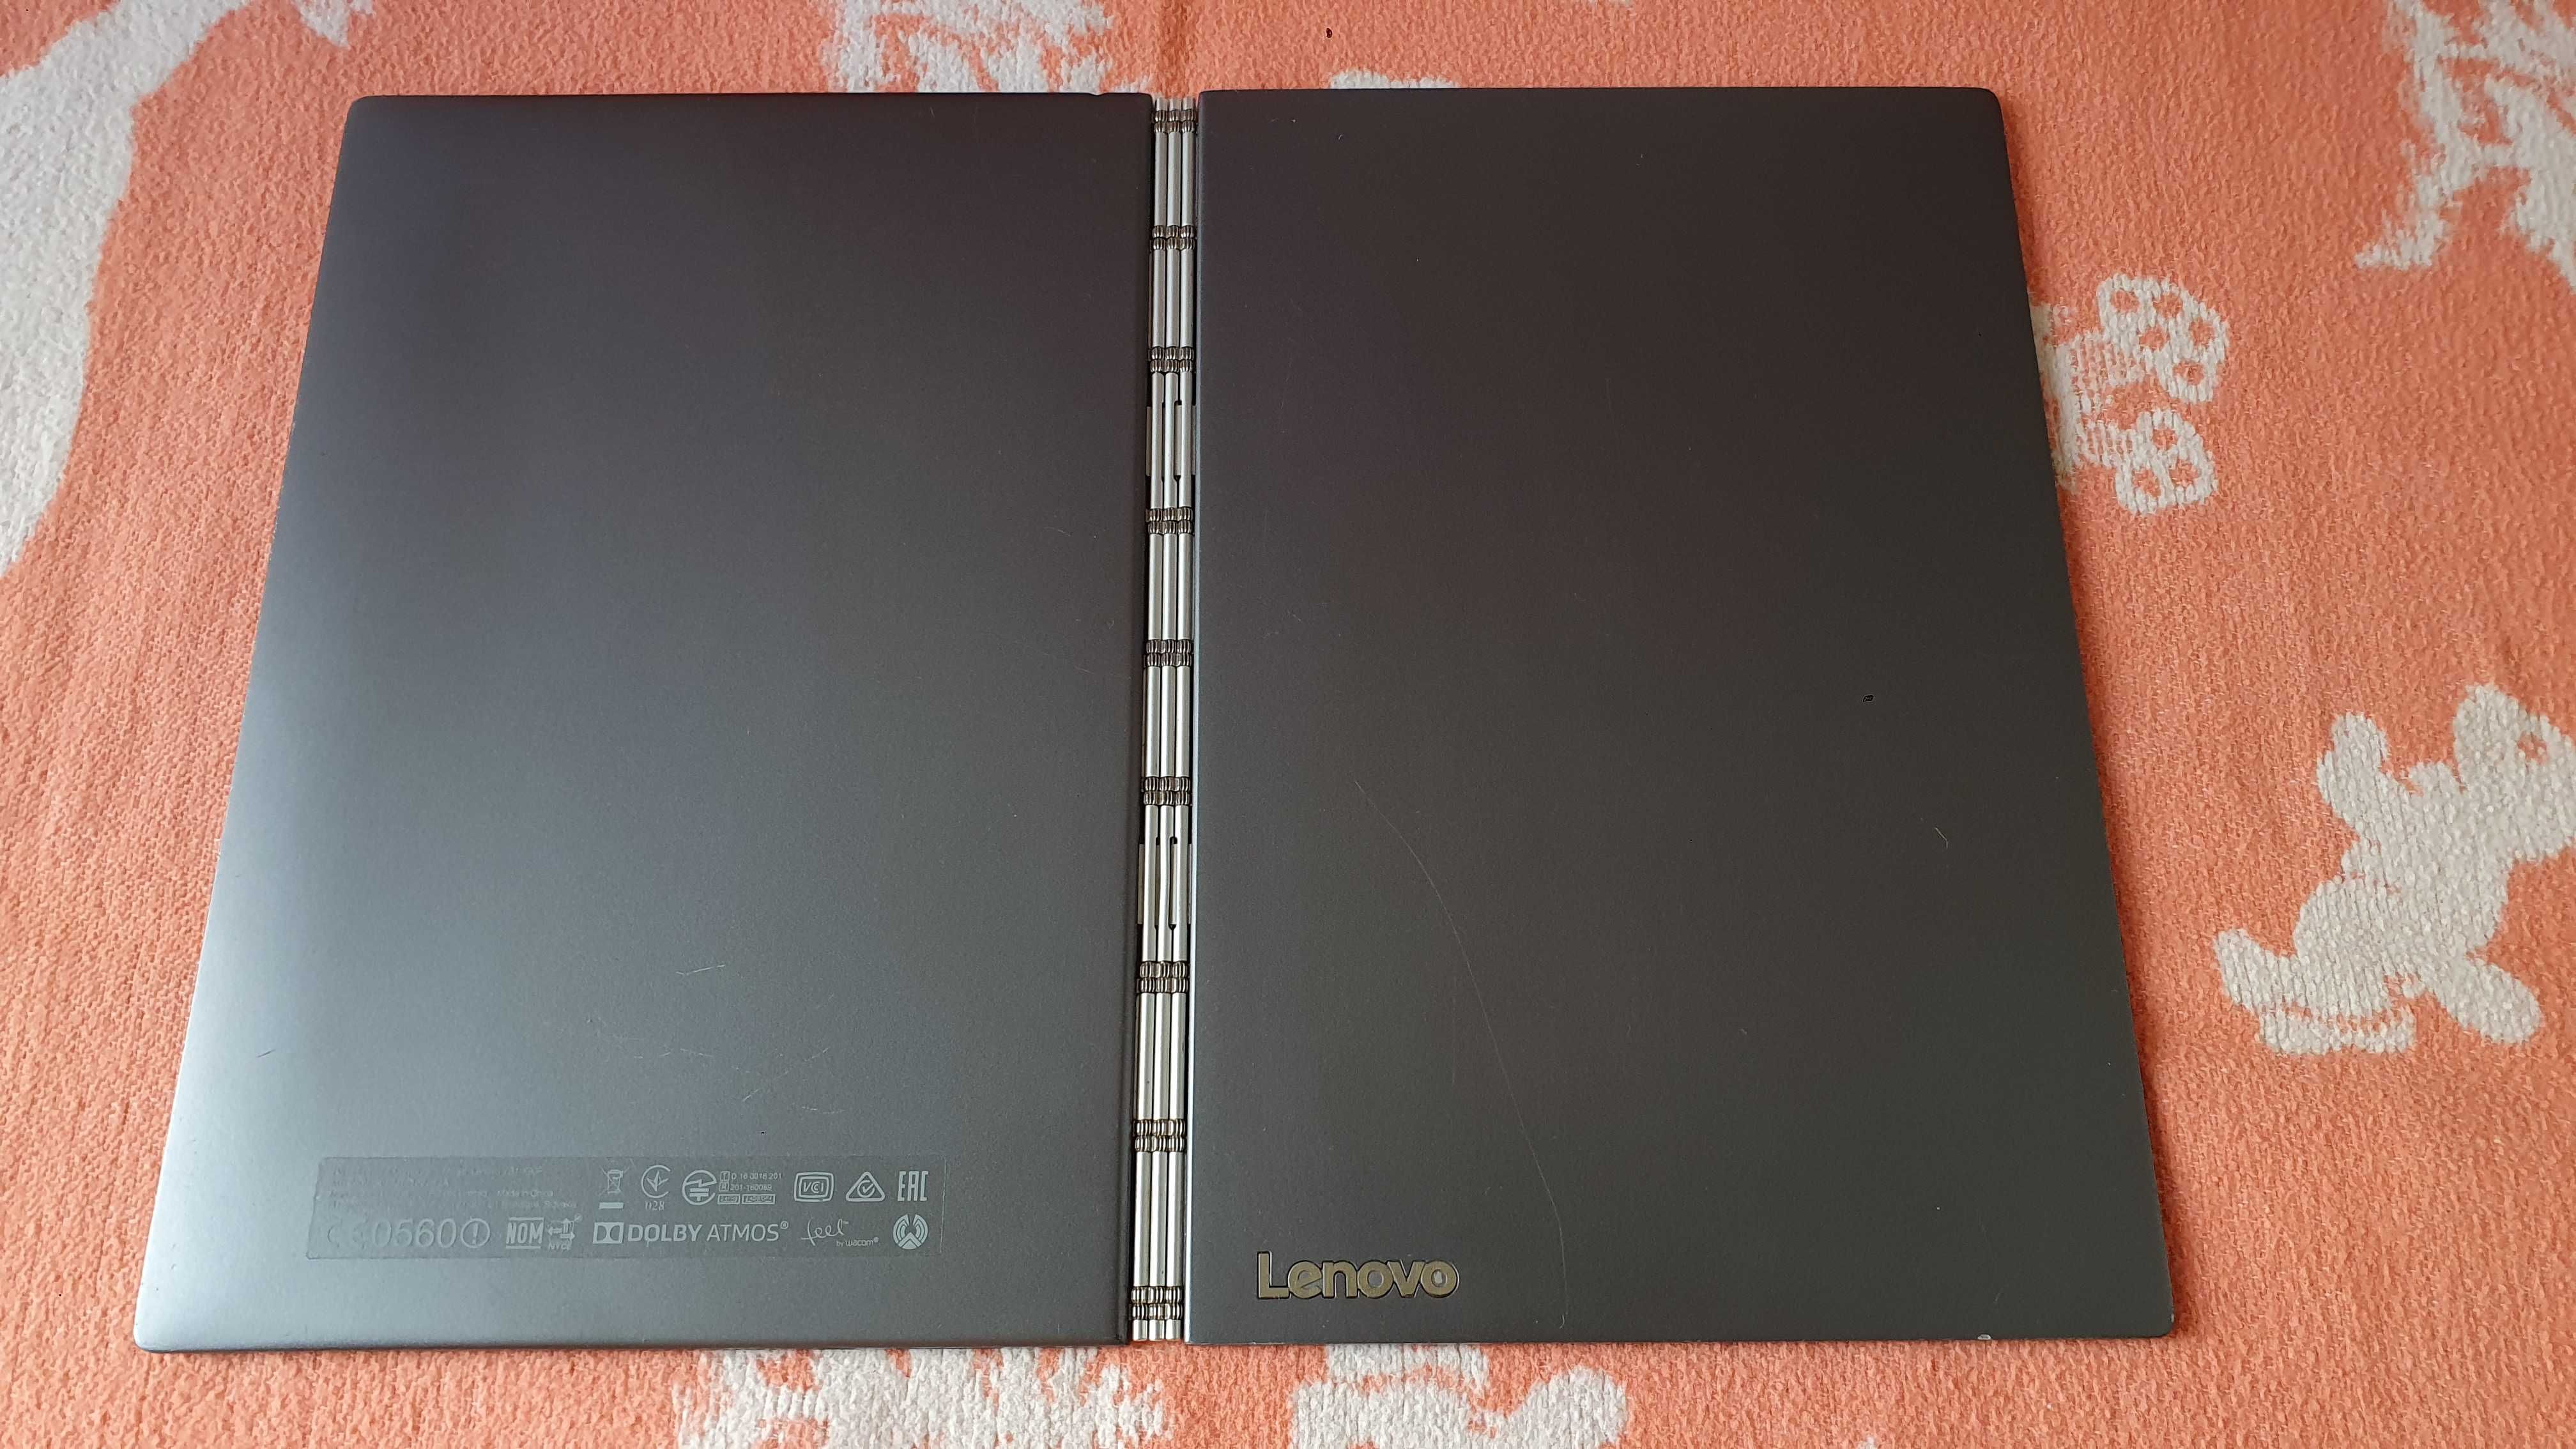 Tableta Lenovo 4 GB ram,quad core, 350 lei